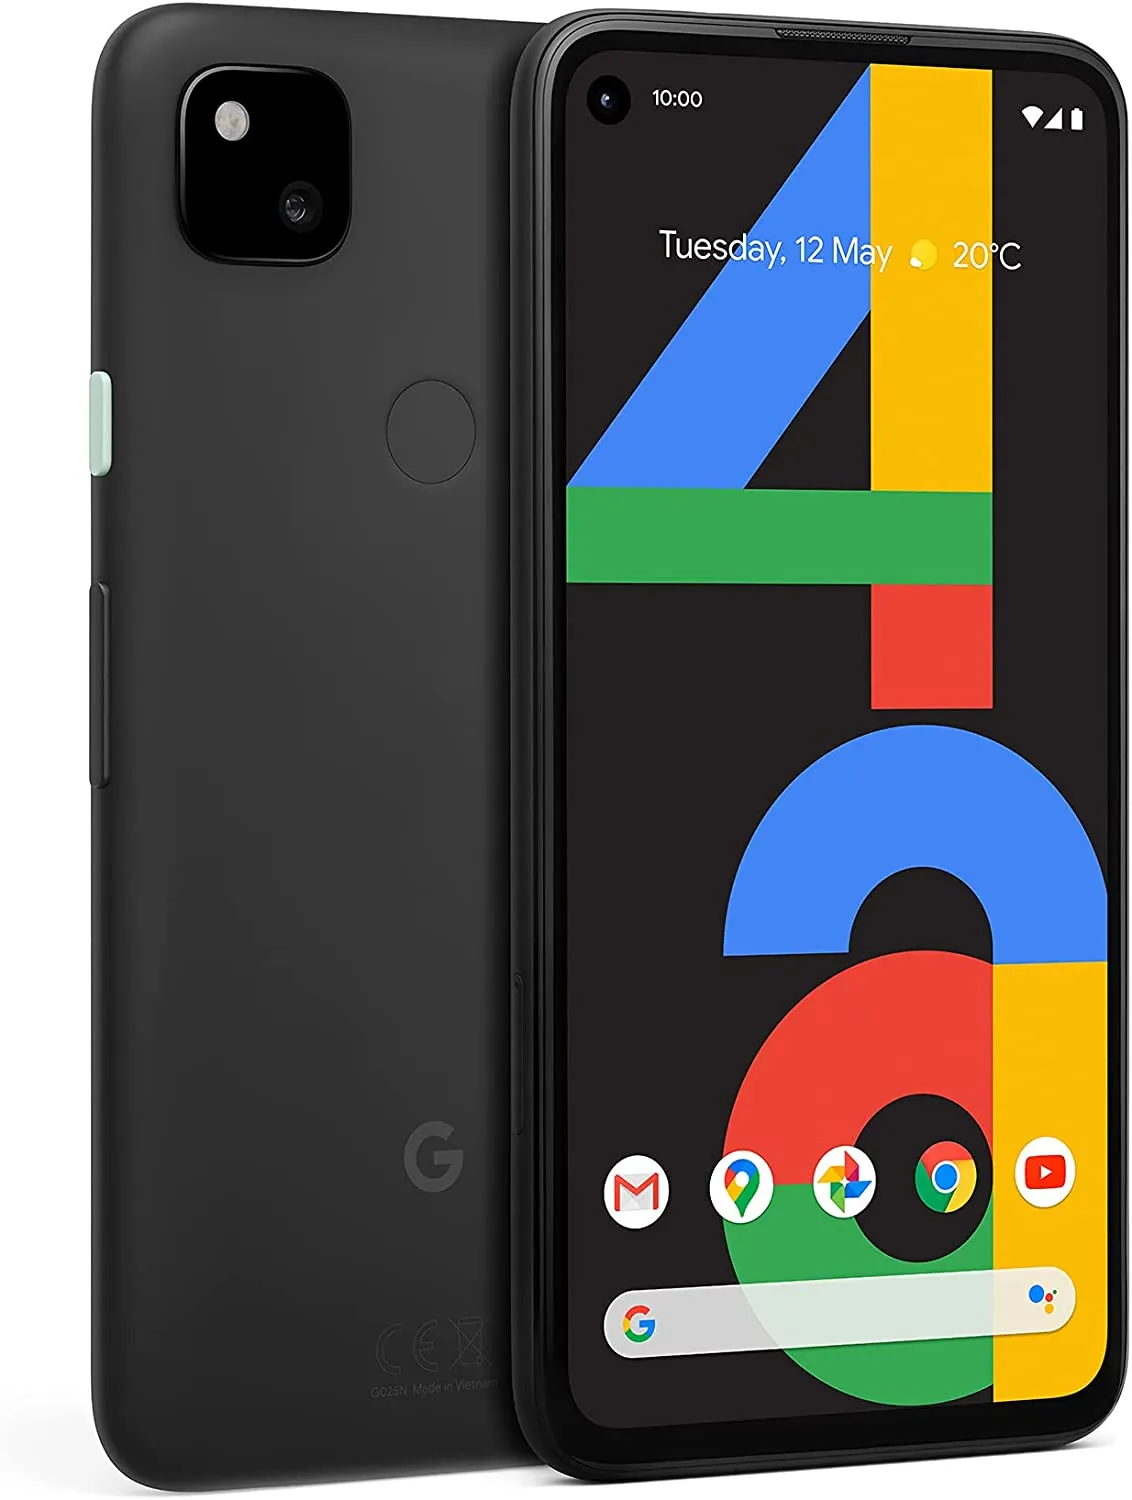 Google Pixel 4a - $619